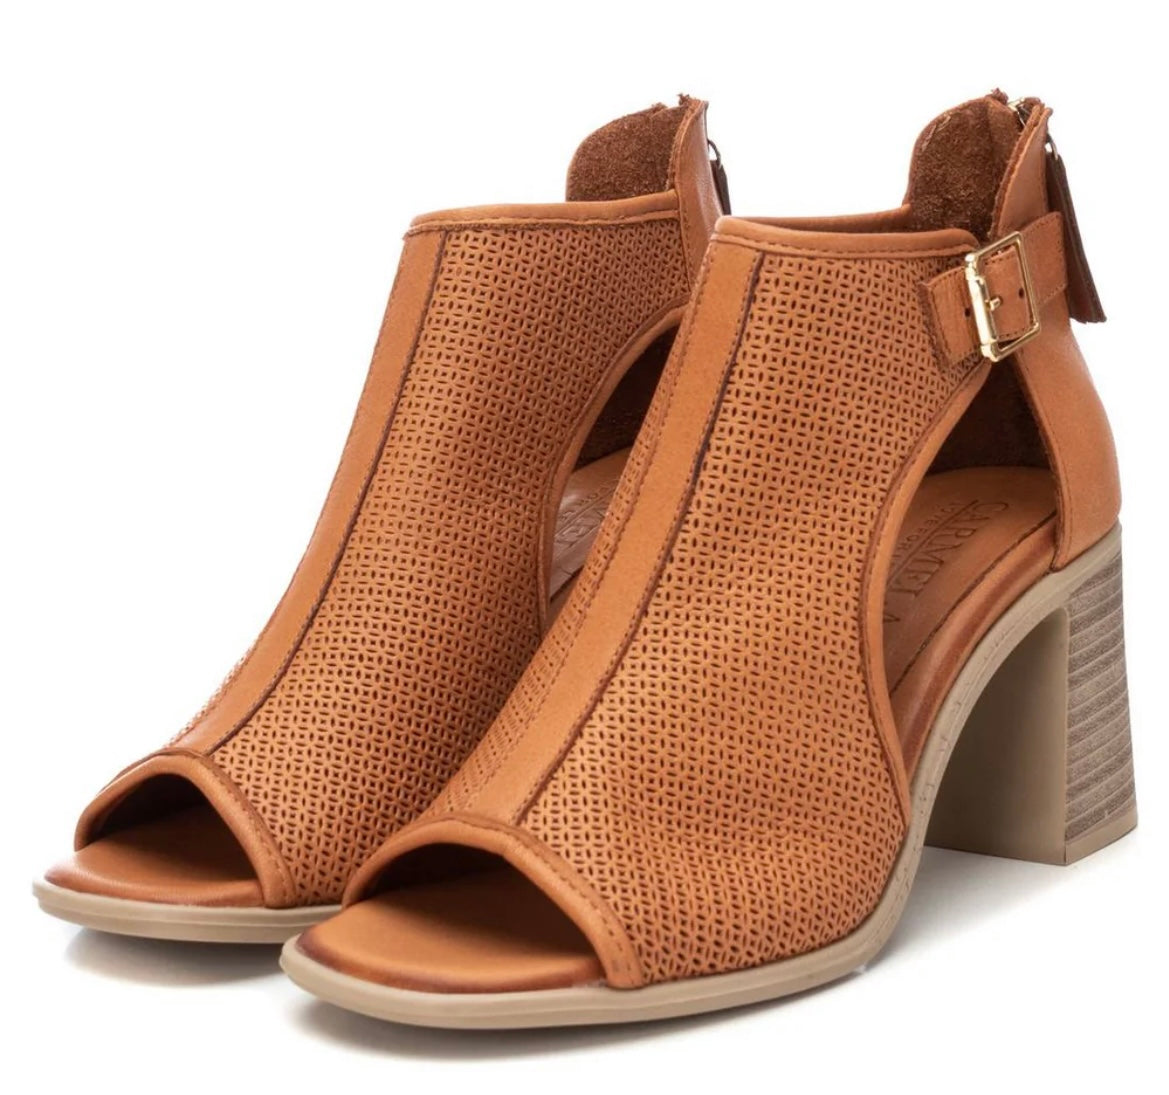 Carmela Tan leather boot style sandal